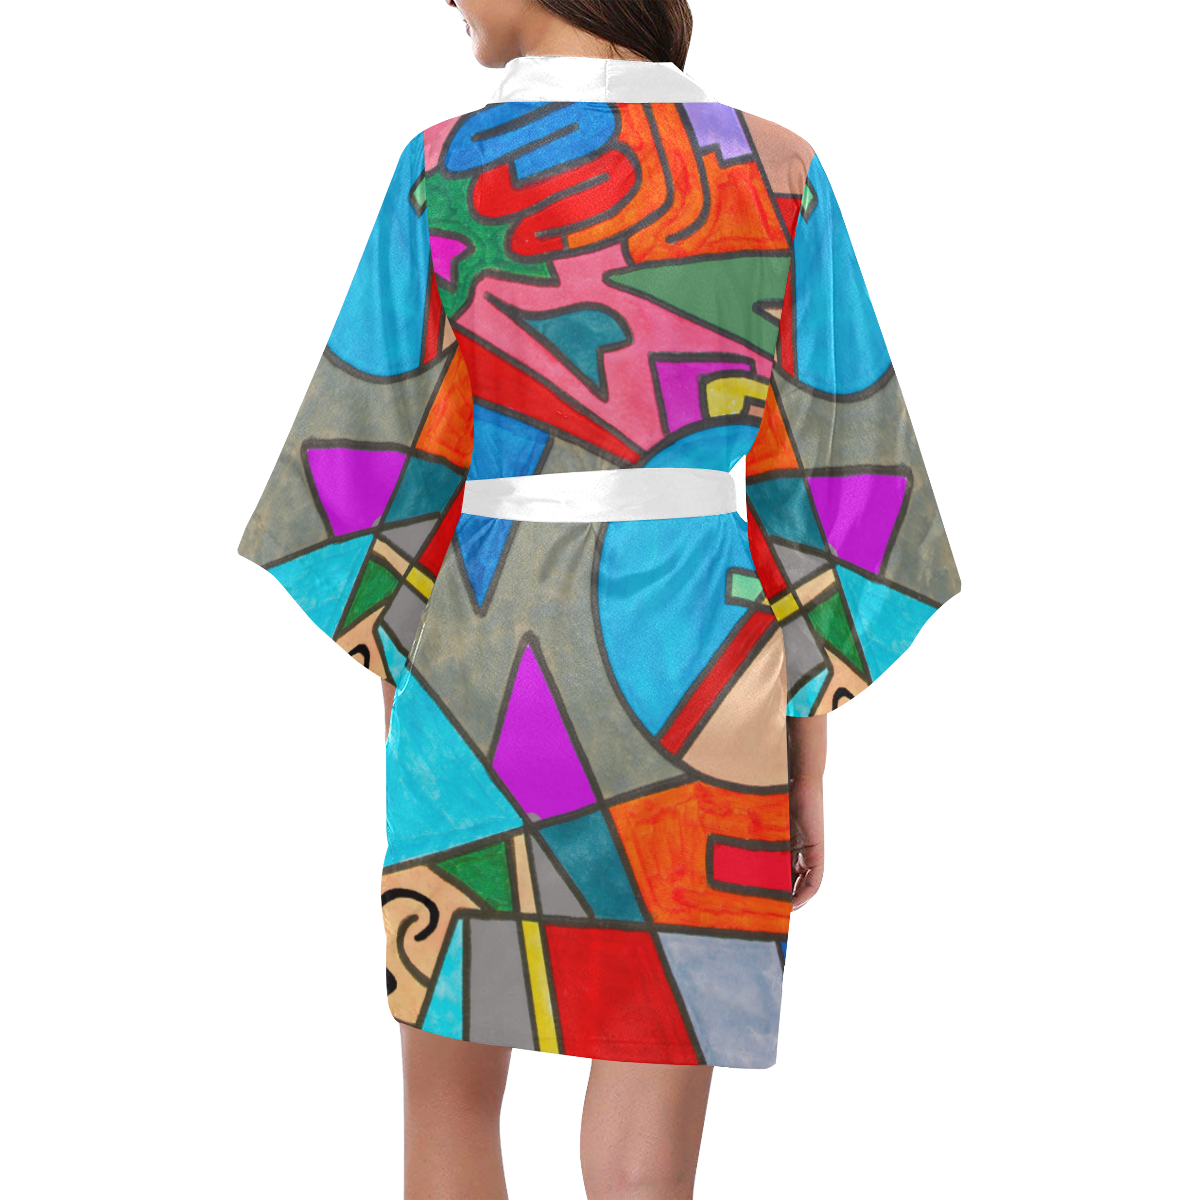 THE TIME MACHINE Kimono Robe